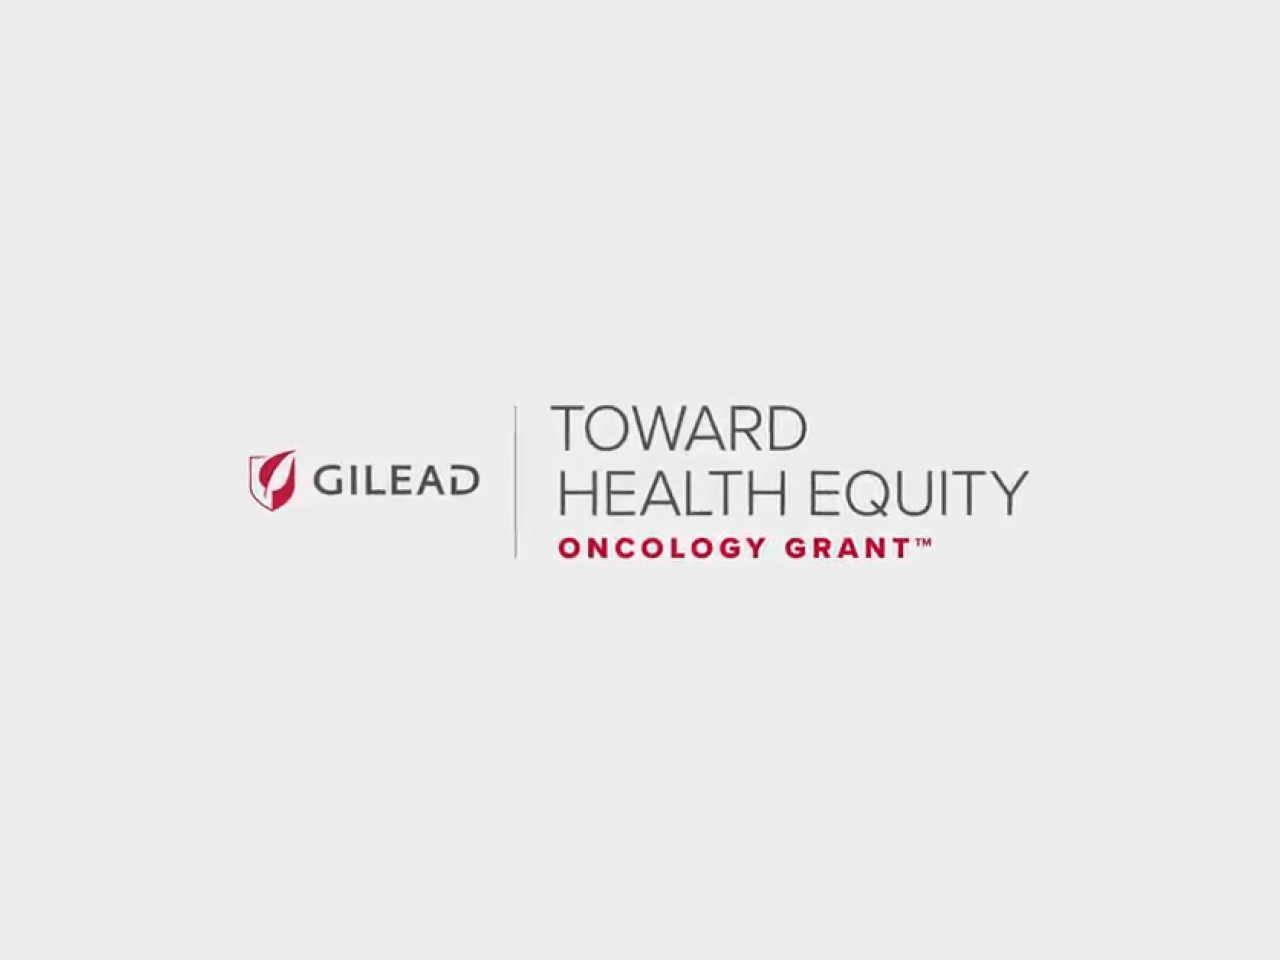 Gilead logo and "Toward Health Equity"